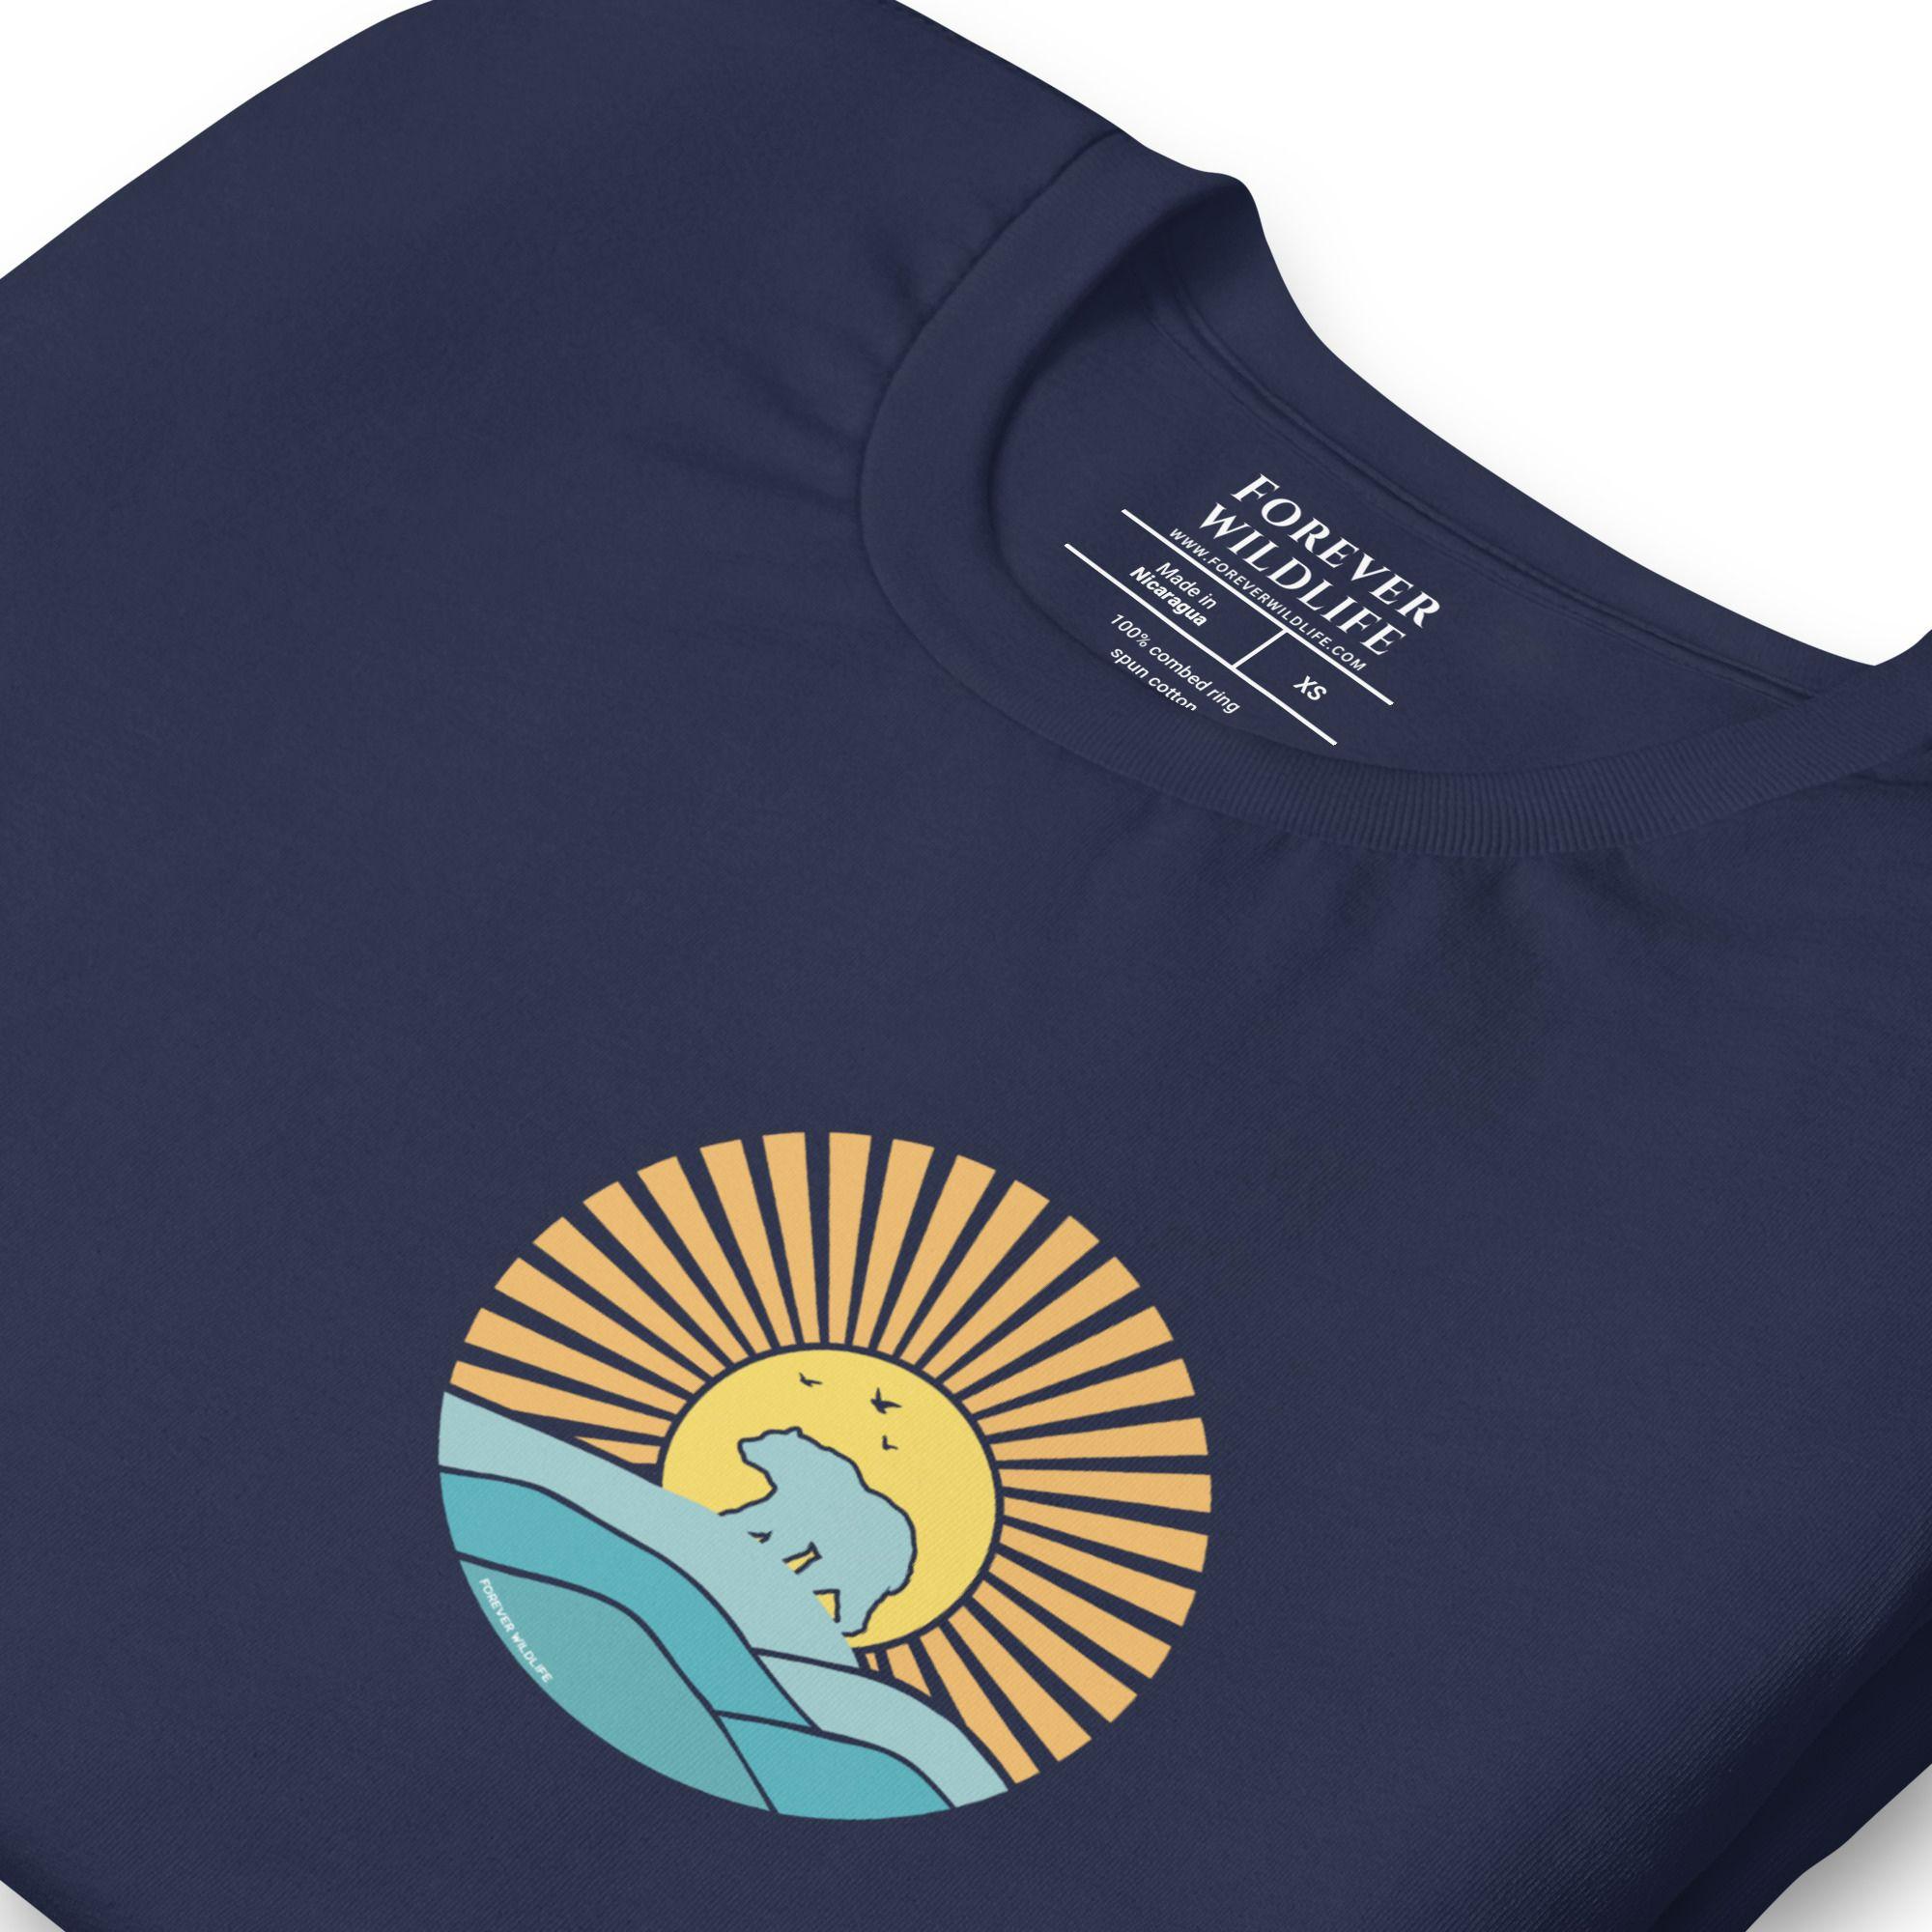 Polar Bear Shirt, stunning navy Polar Bear T-Shirt with Polar Bear graphic with sunset by Forever Wildlife selling Wildlife T Shirts.